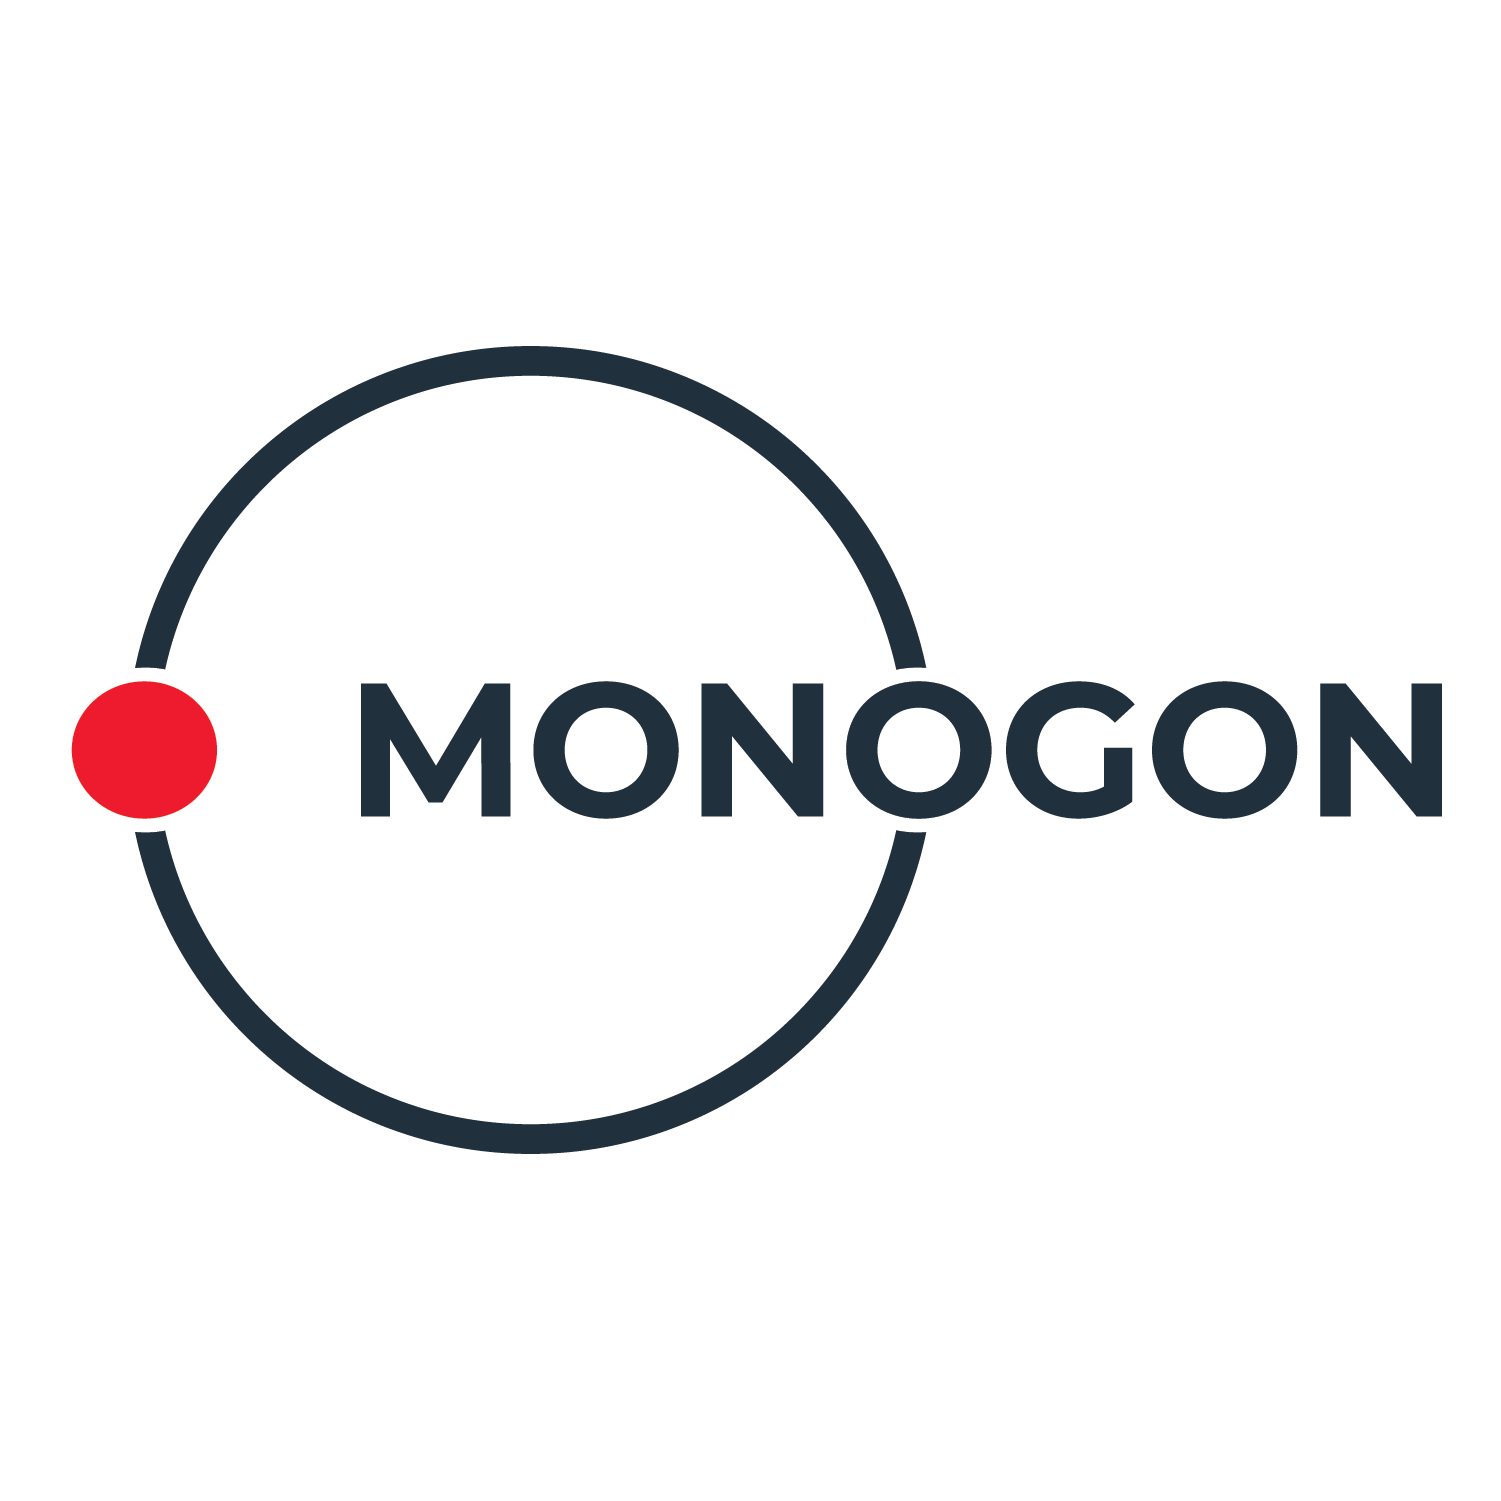 Monogon Design